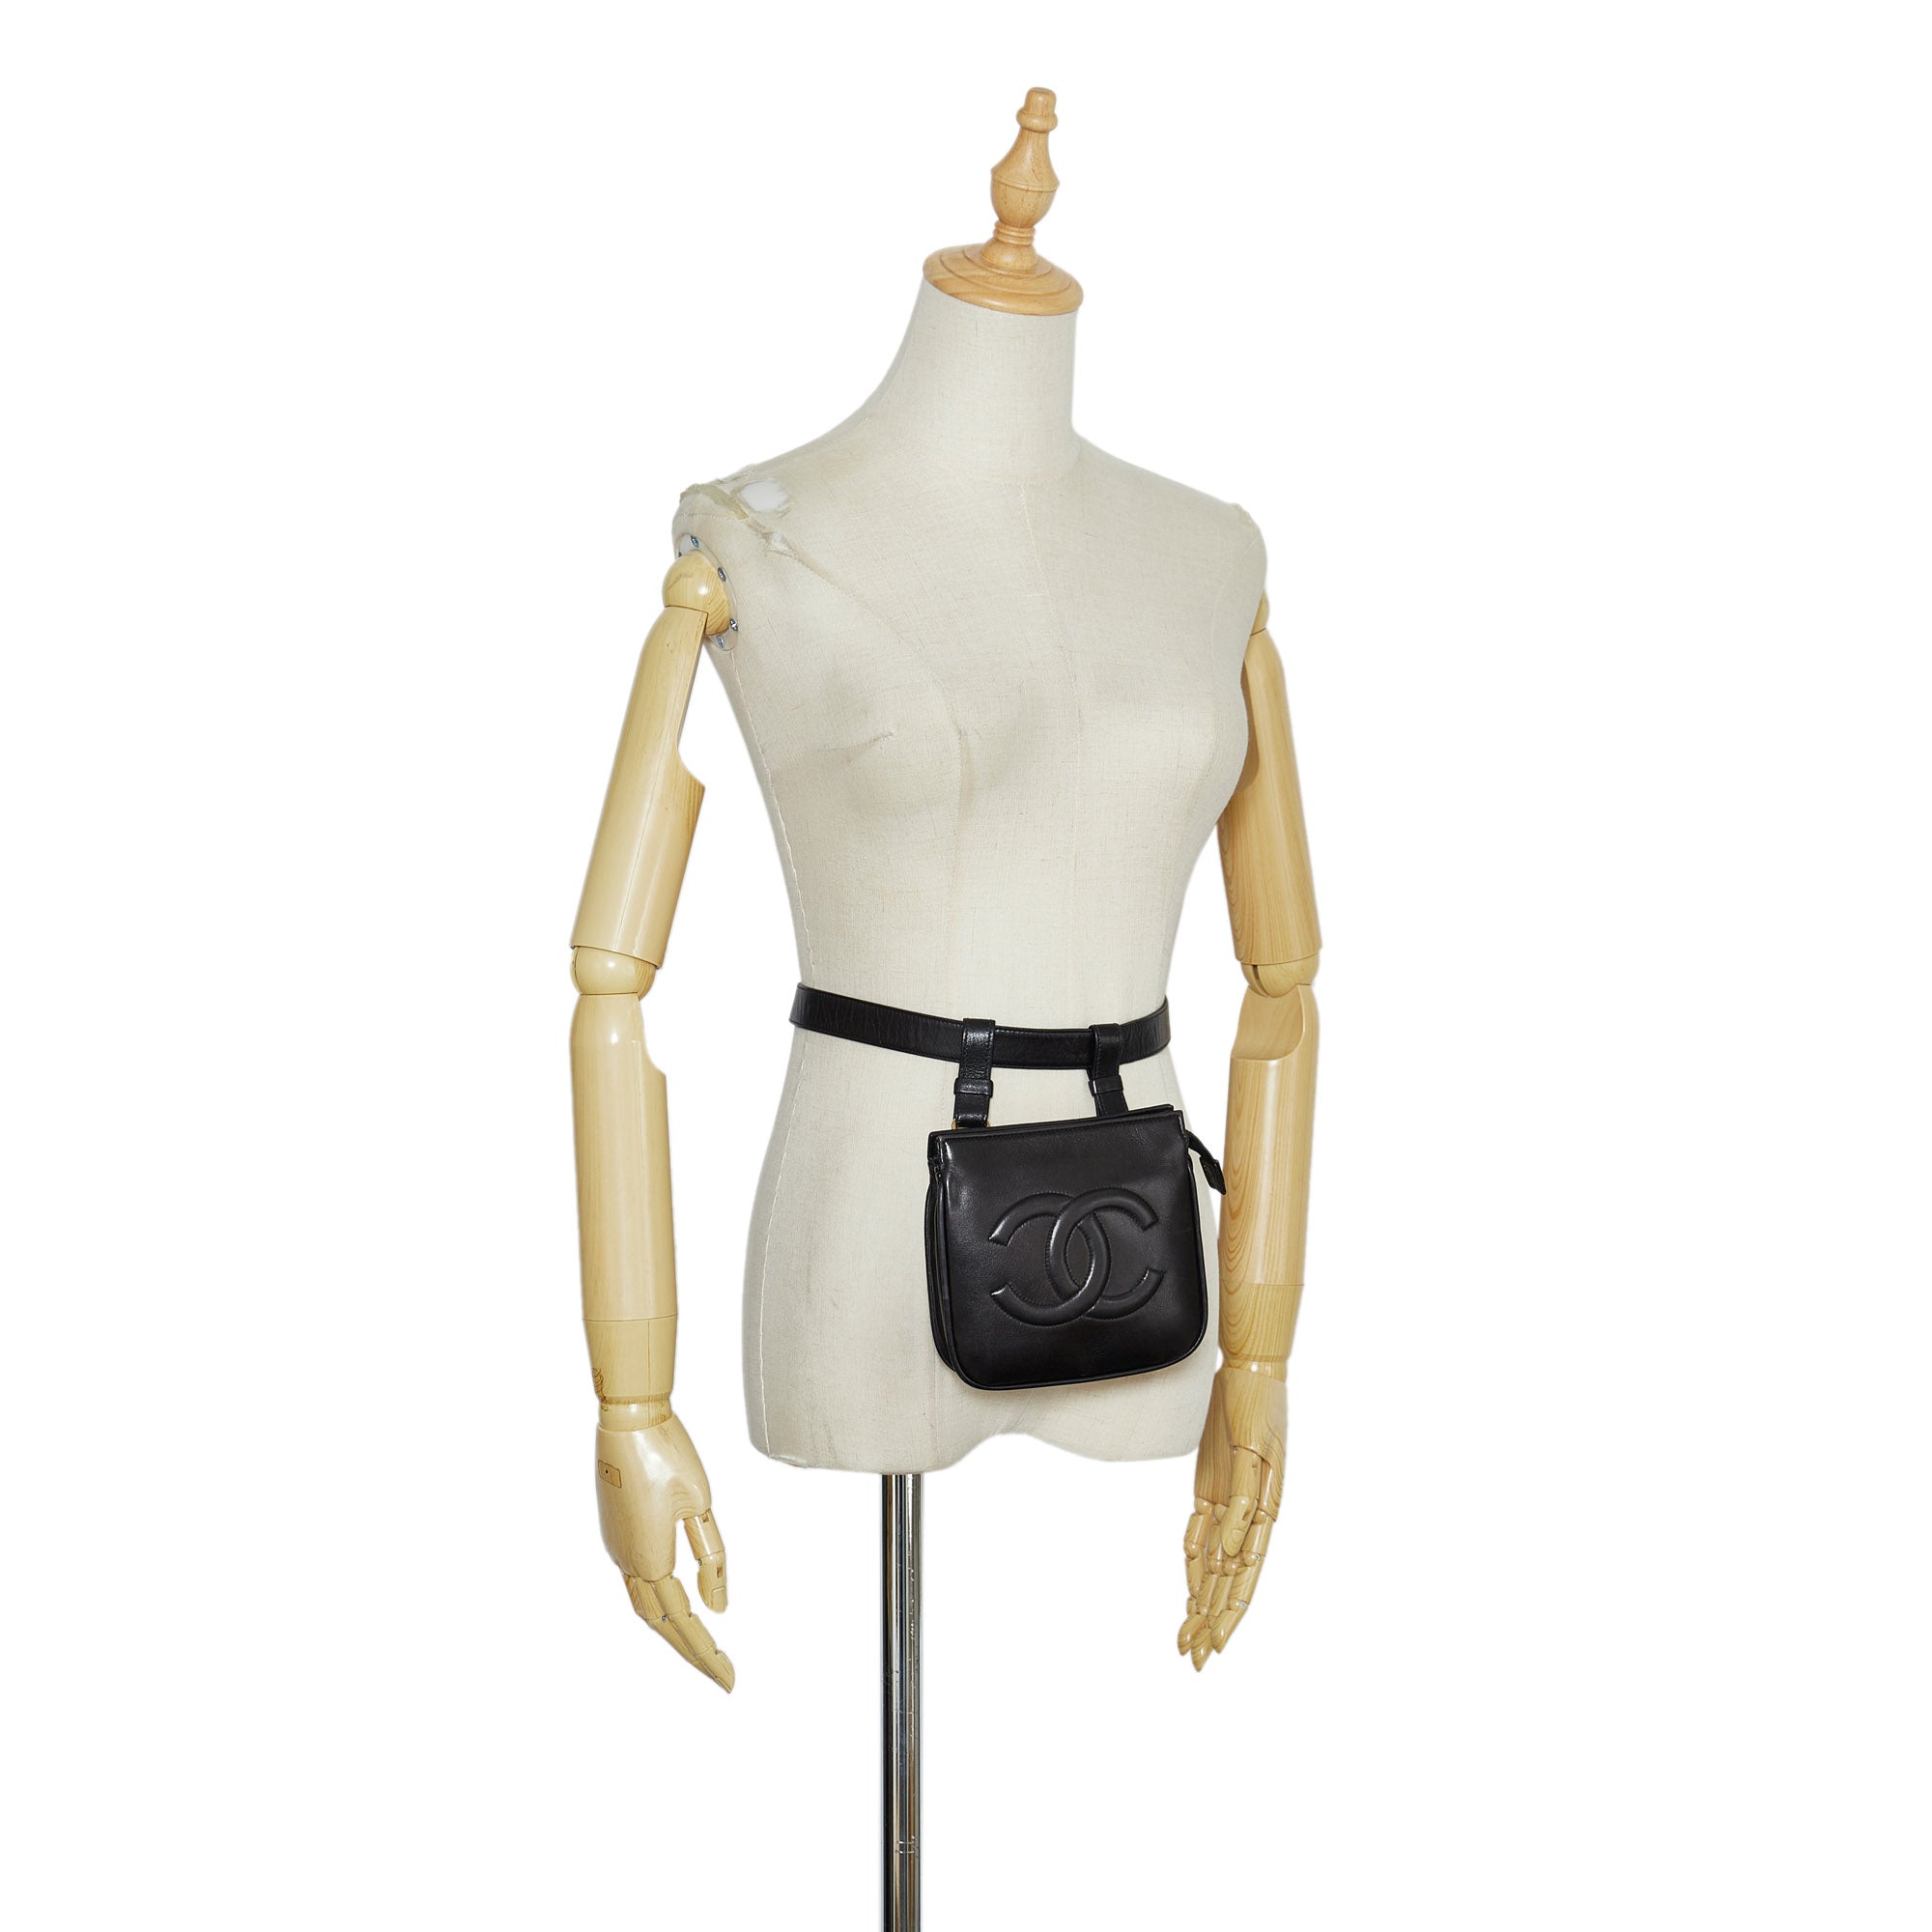 CHANEL Chanel CC Belt Bag Black Lambskin - Vault 55